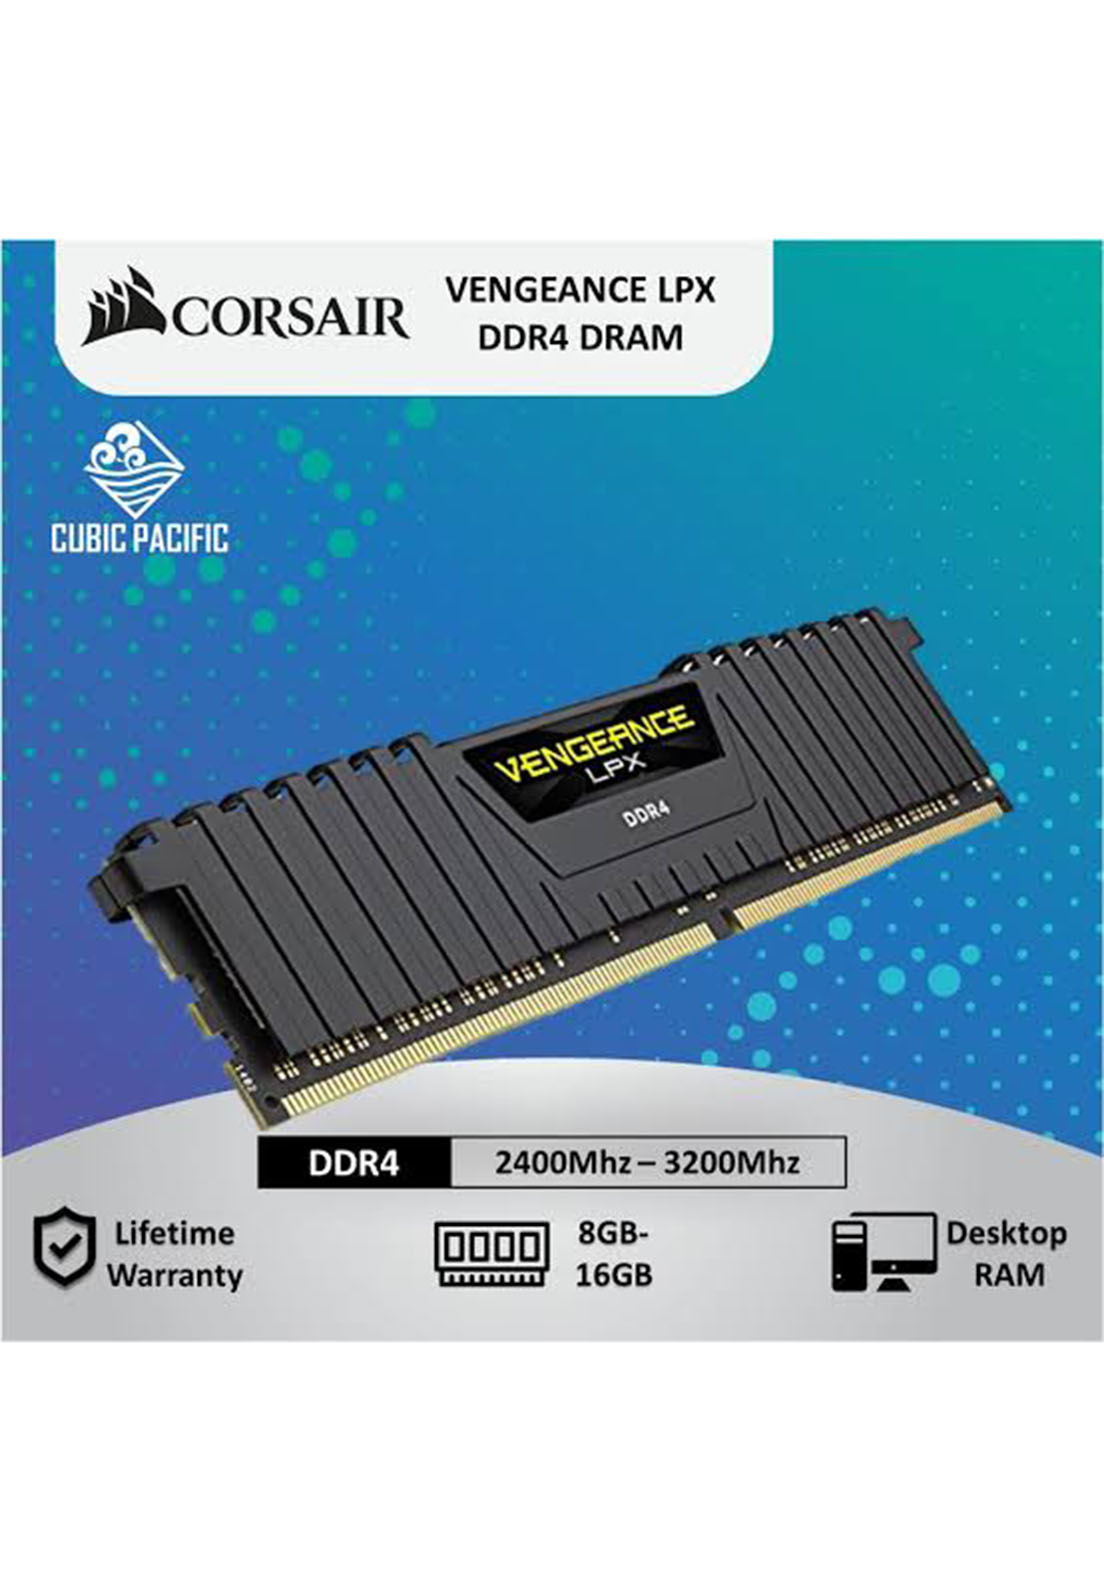 Corsair Vengeance LPX 8GB DDR4 - Comprar memoria RAM DDR4